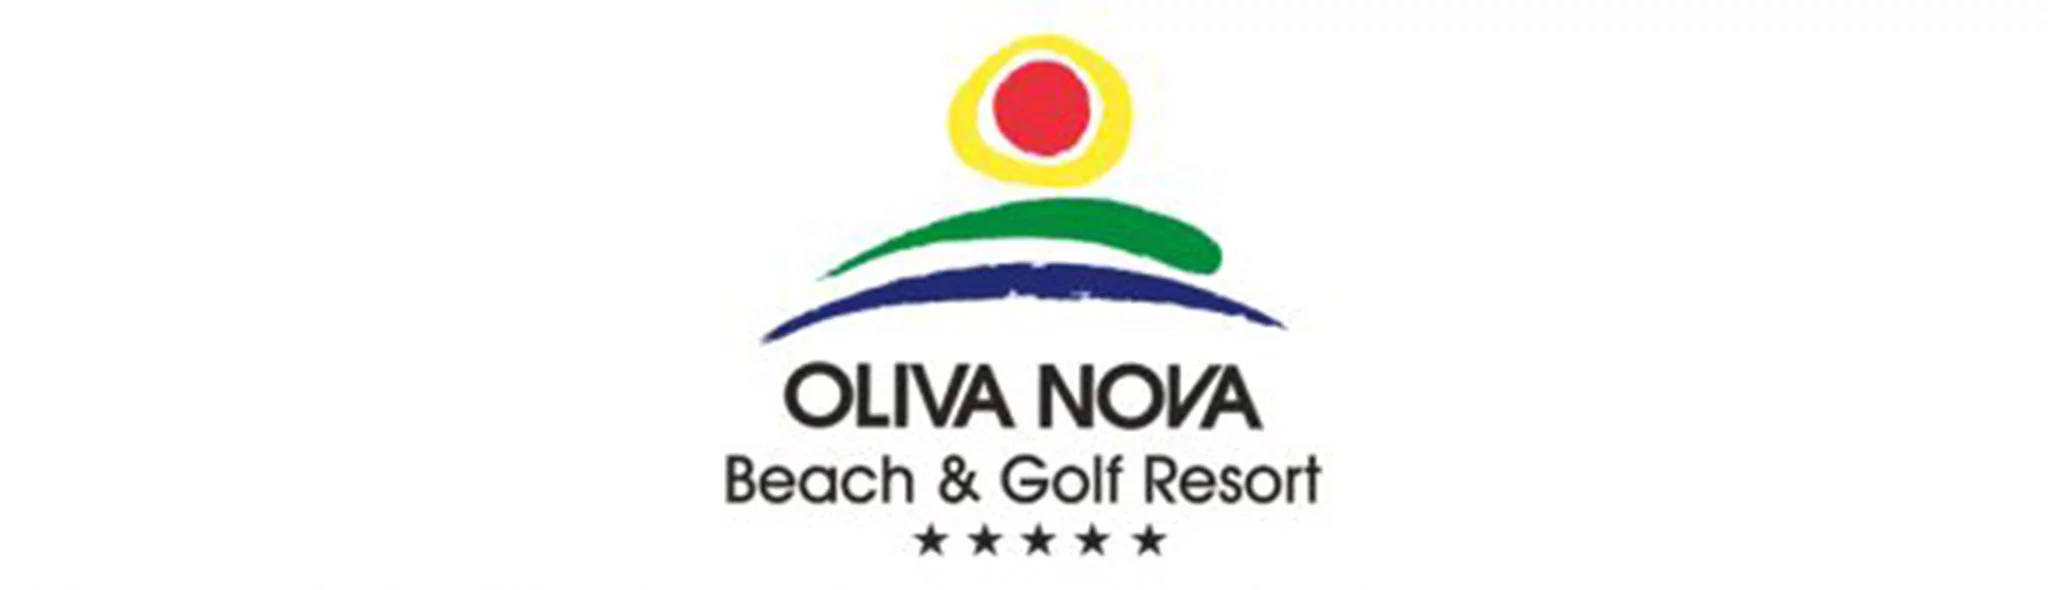 Logotipo de Oliva Nova